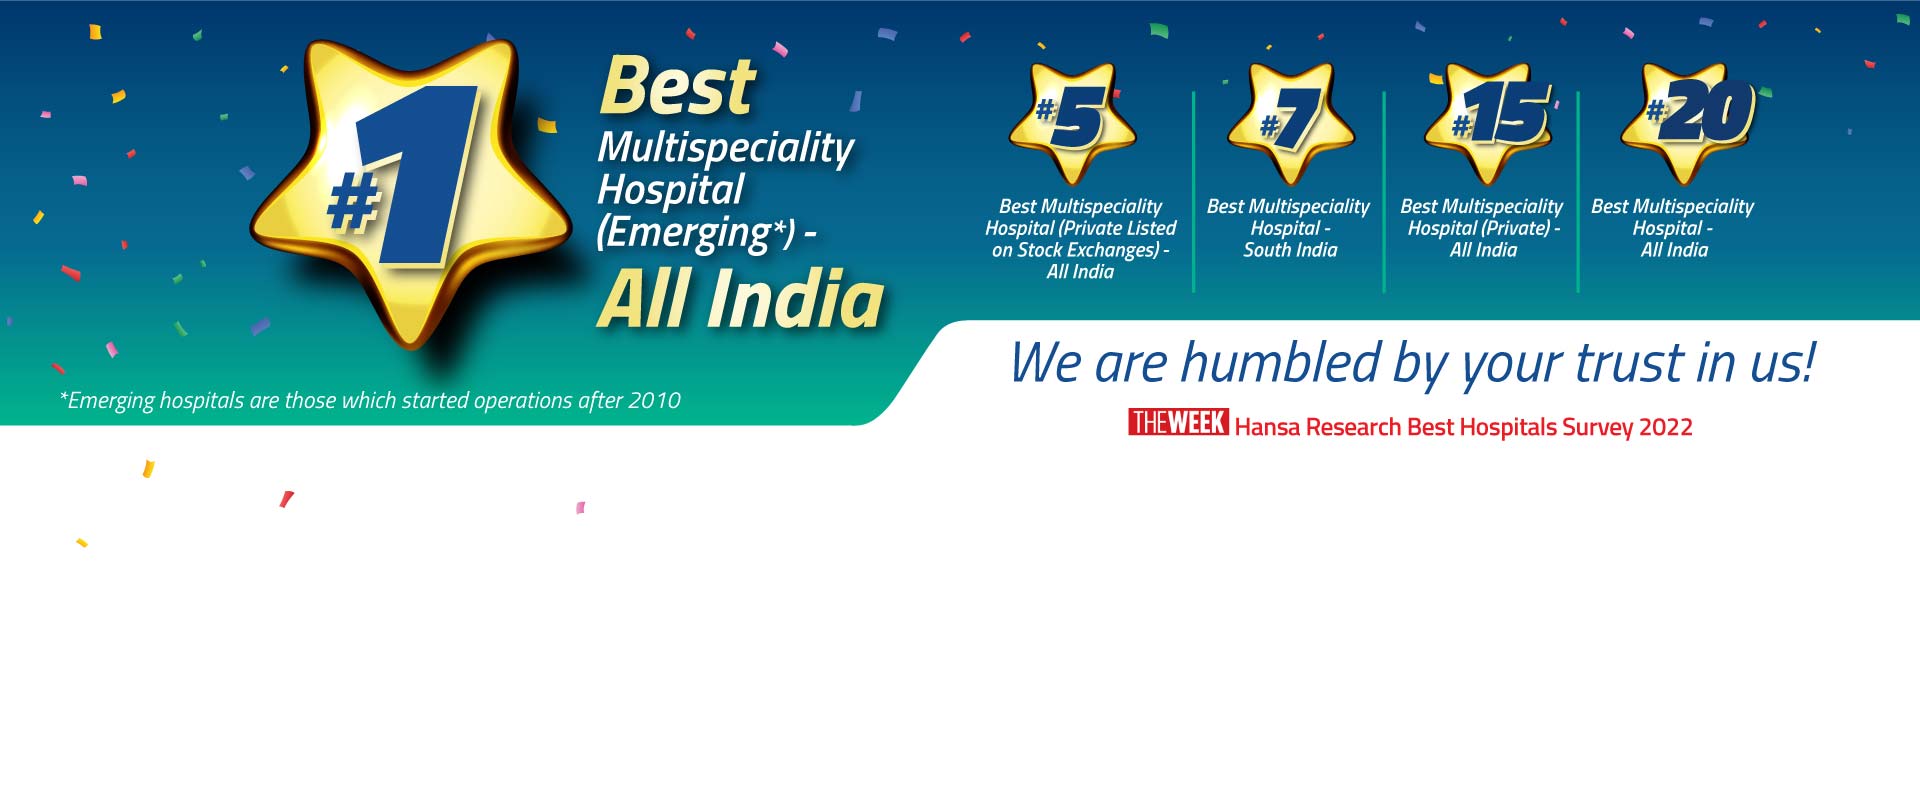 The Week's - Best Multispecialty Hospital Award - Aster Medcity Hospital, Kochi